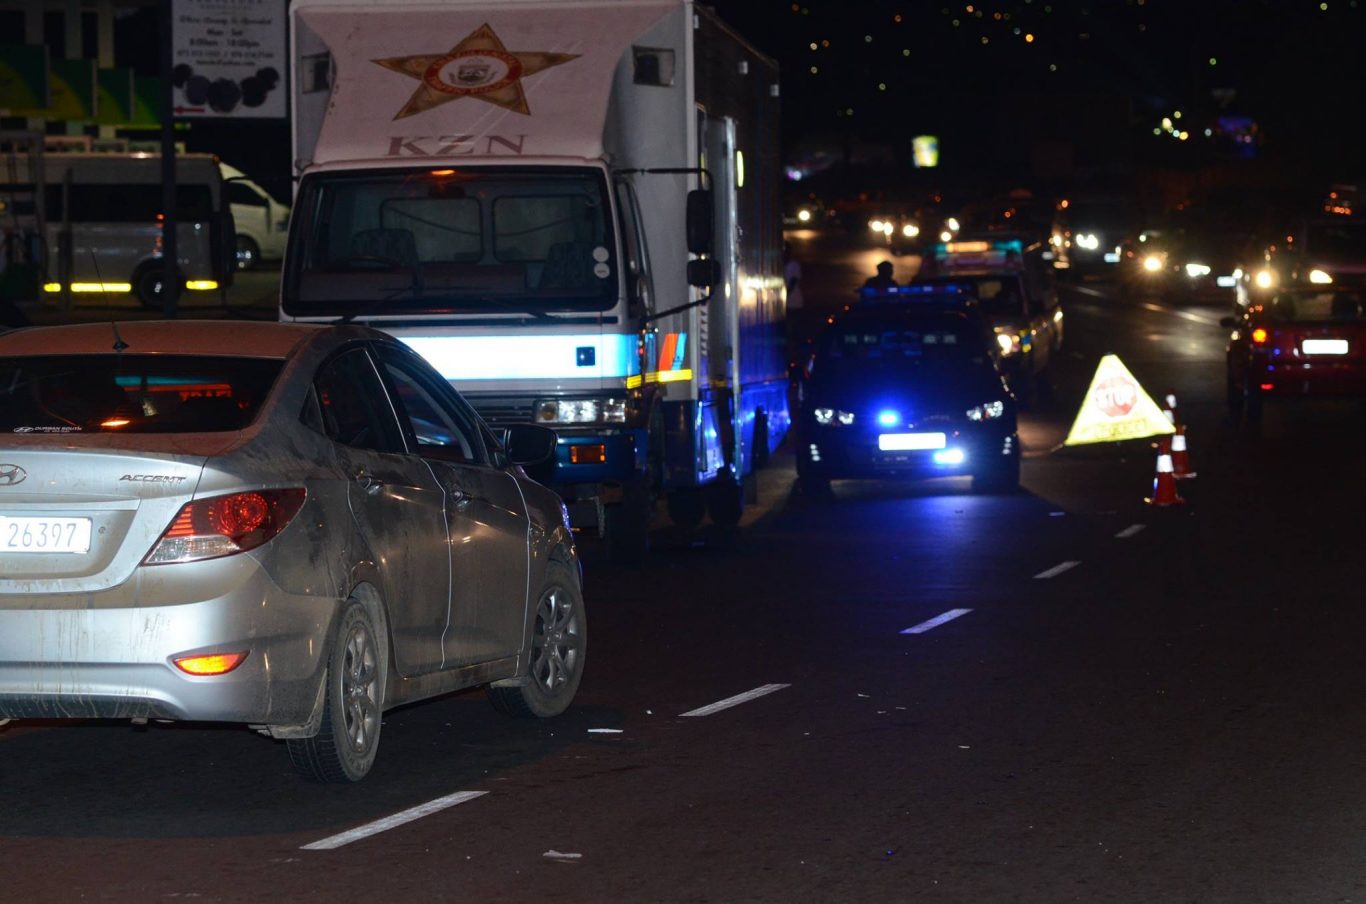 KZN Transport MEC participates in enforcement leading to arrest of 35 drunk drivers at Umlazi